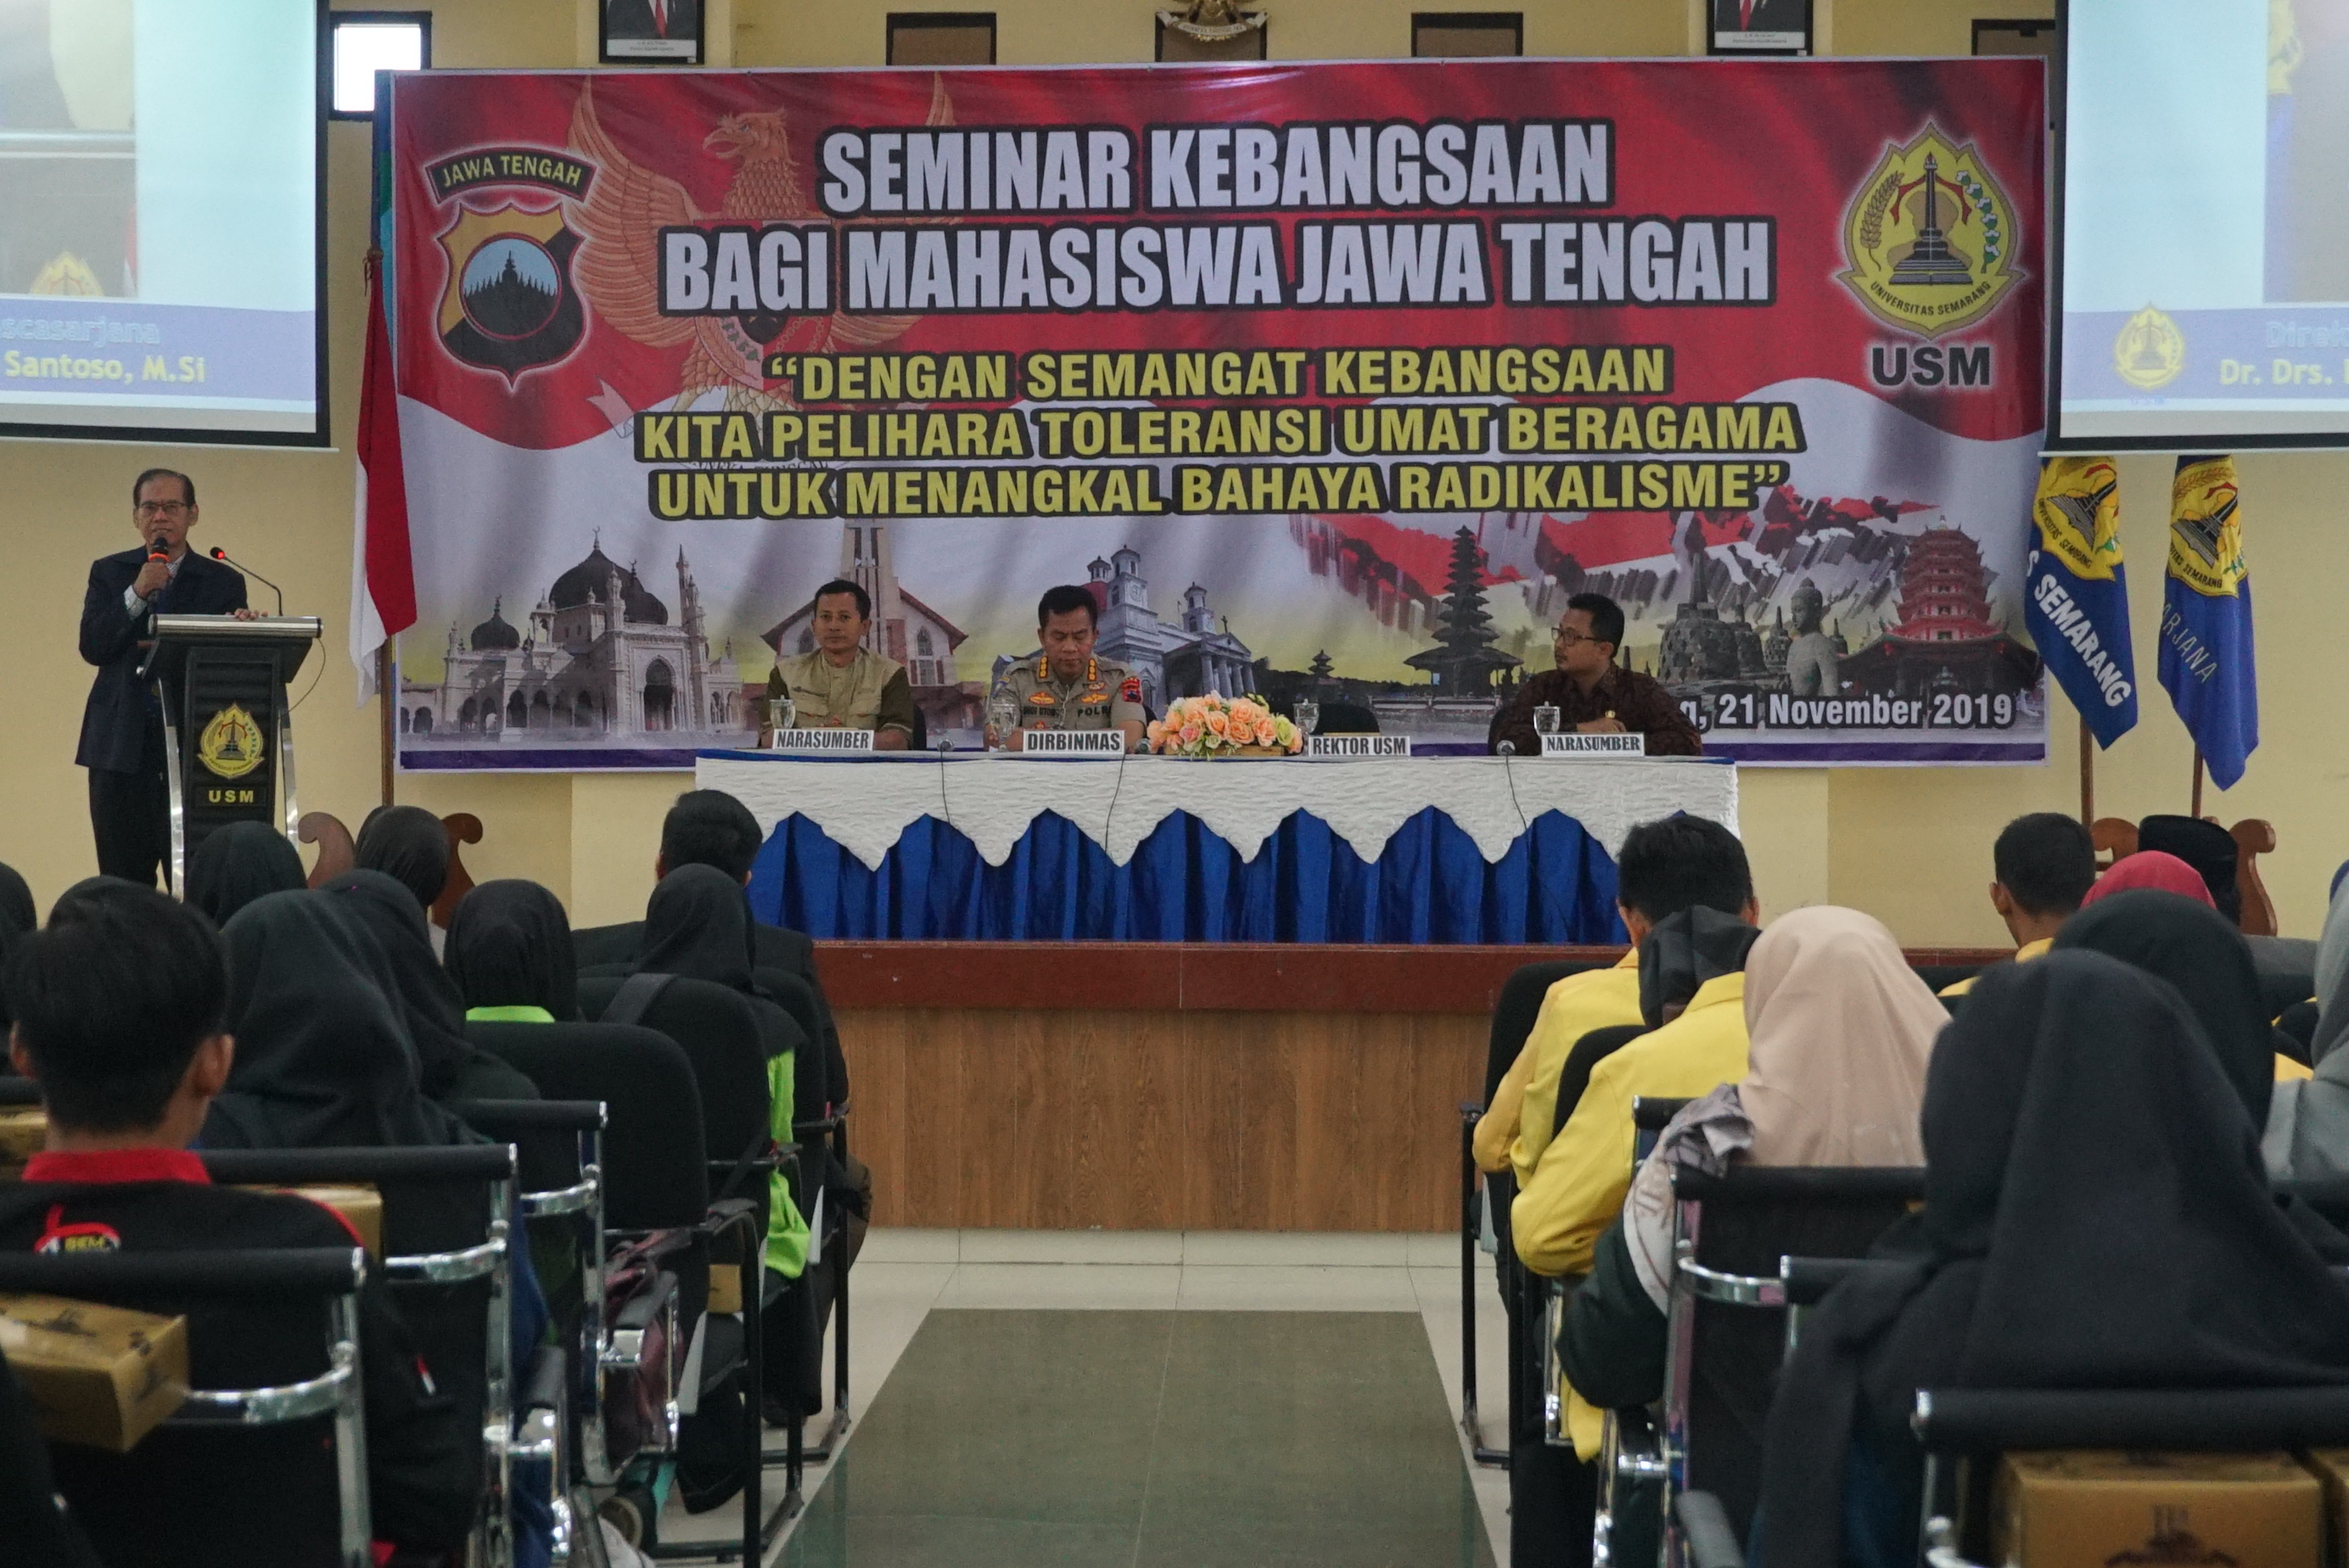 USM bersama POLDA Jawa Tengah selengarakan Seminar Kebangsaan bagi Mahasiswa Jawa Tengah